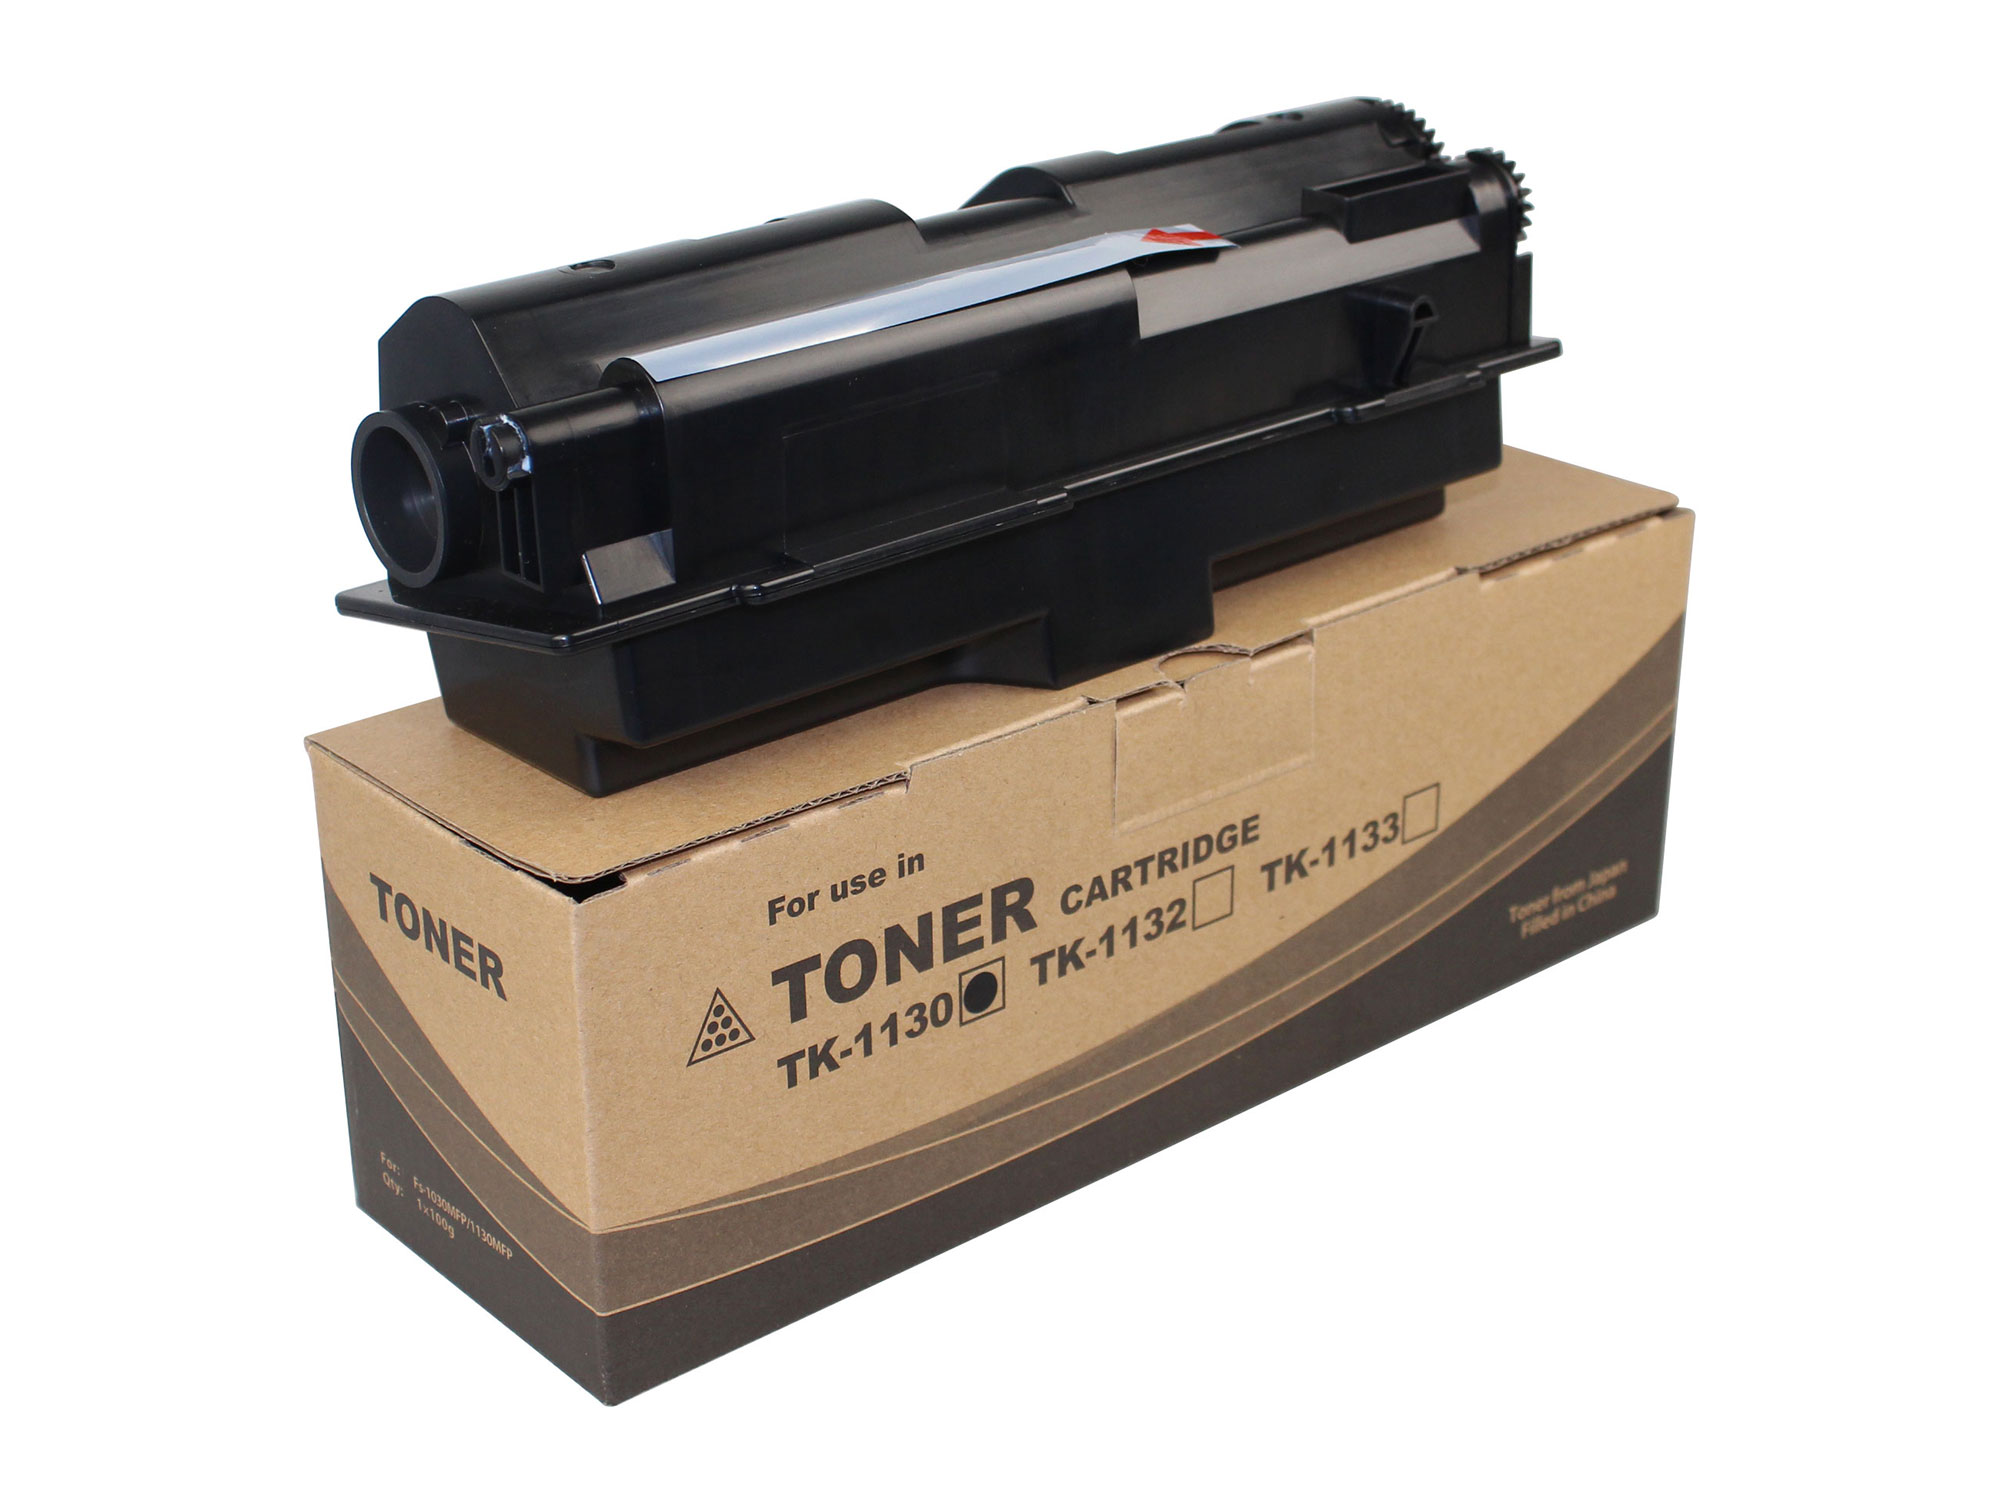 TK-1130 Toner Cartridge for Kyocera FS-1030MFP